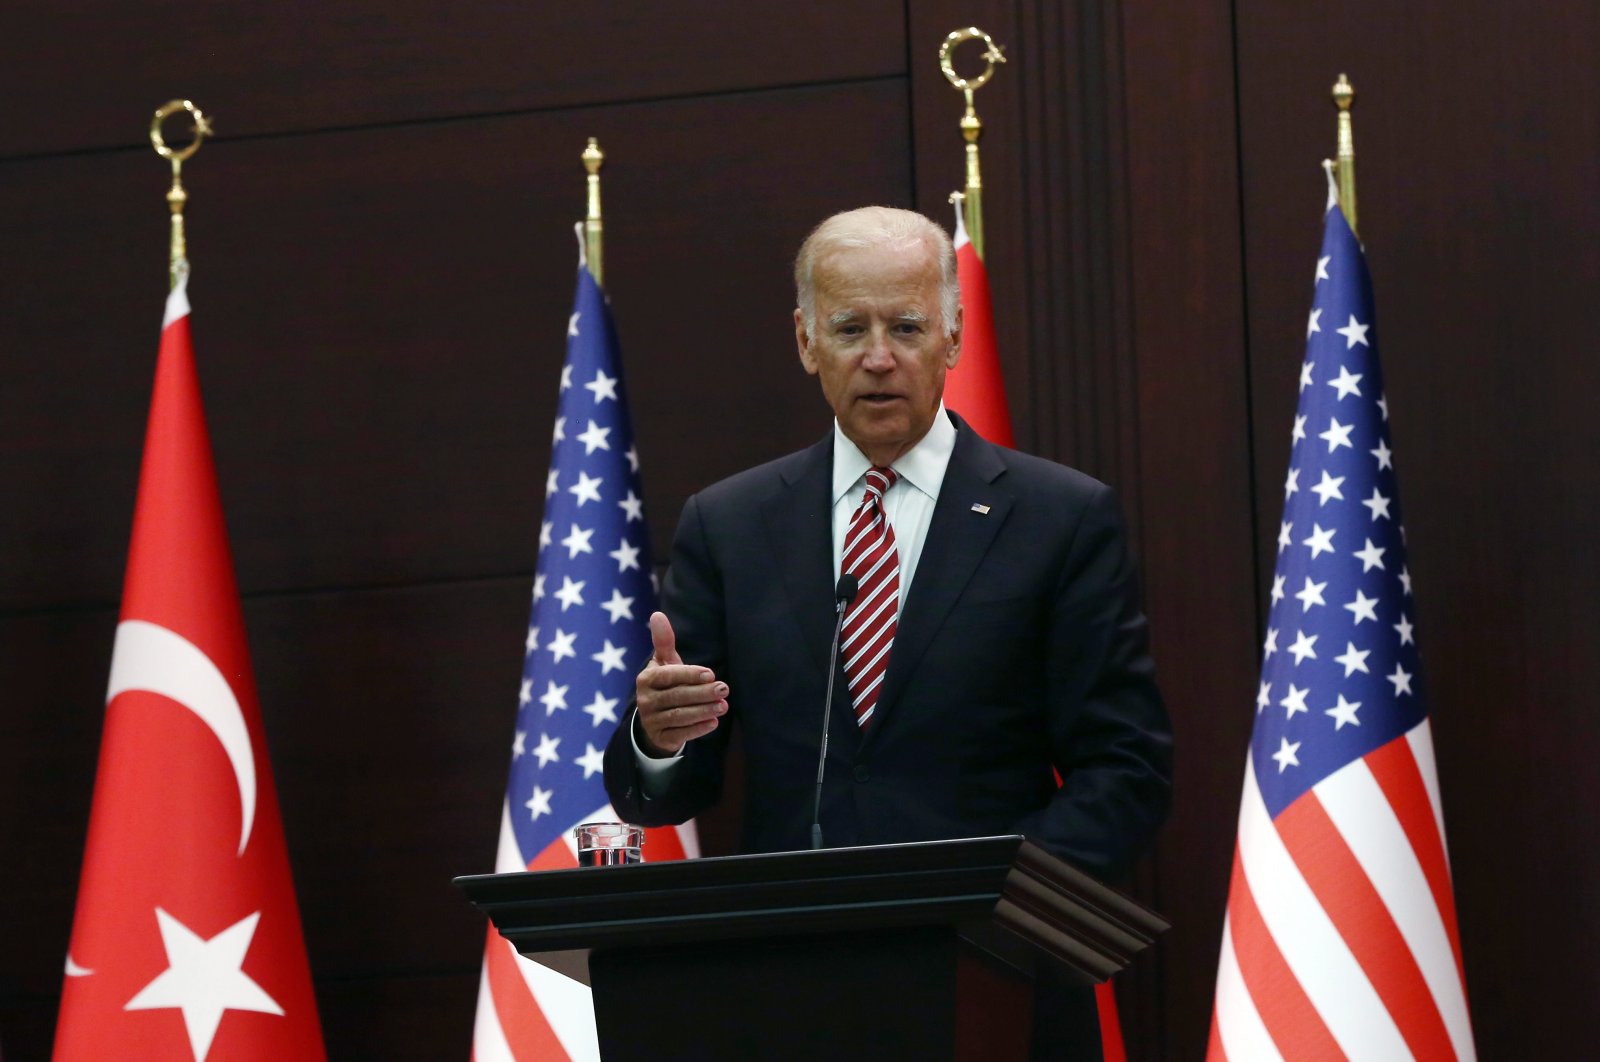 Former U.S. Vice President Joe Biden speaks to the media after talks with then-Prime Minister Binali Yıldırım in the capital Ankara, Turkey, Aug. 24, 2016. (AP Photo)